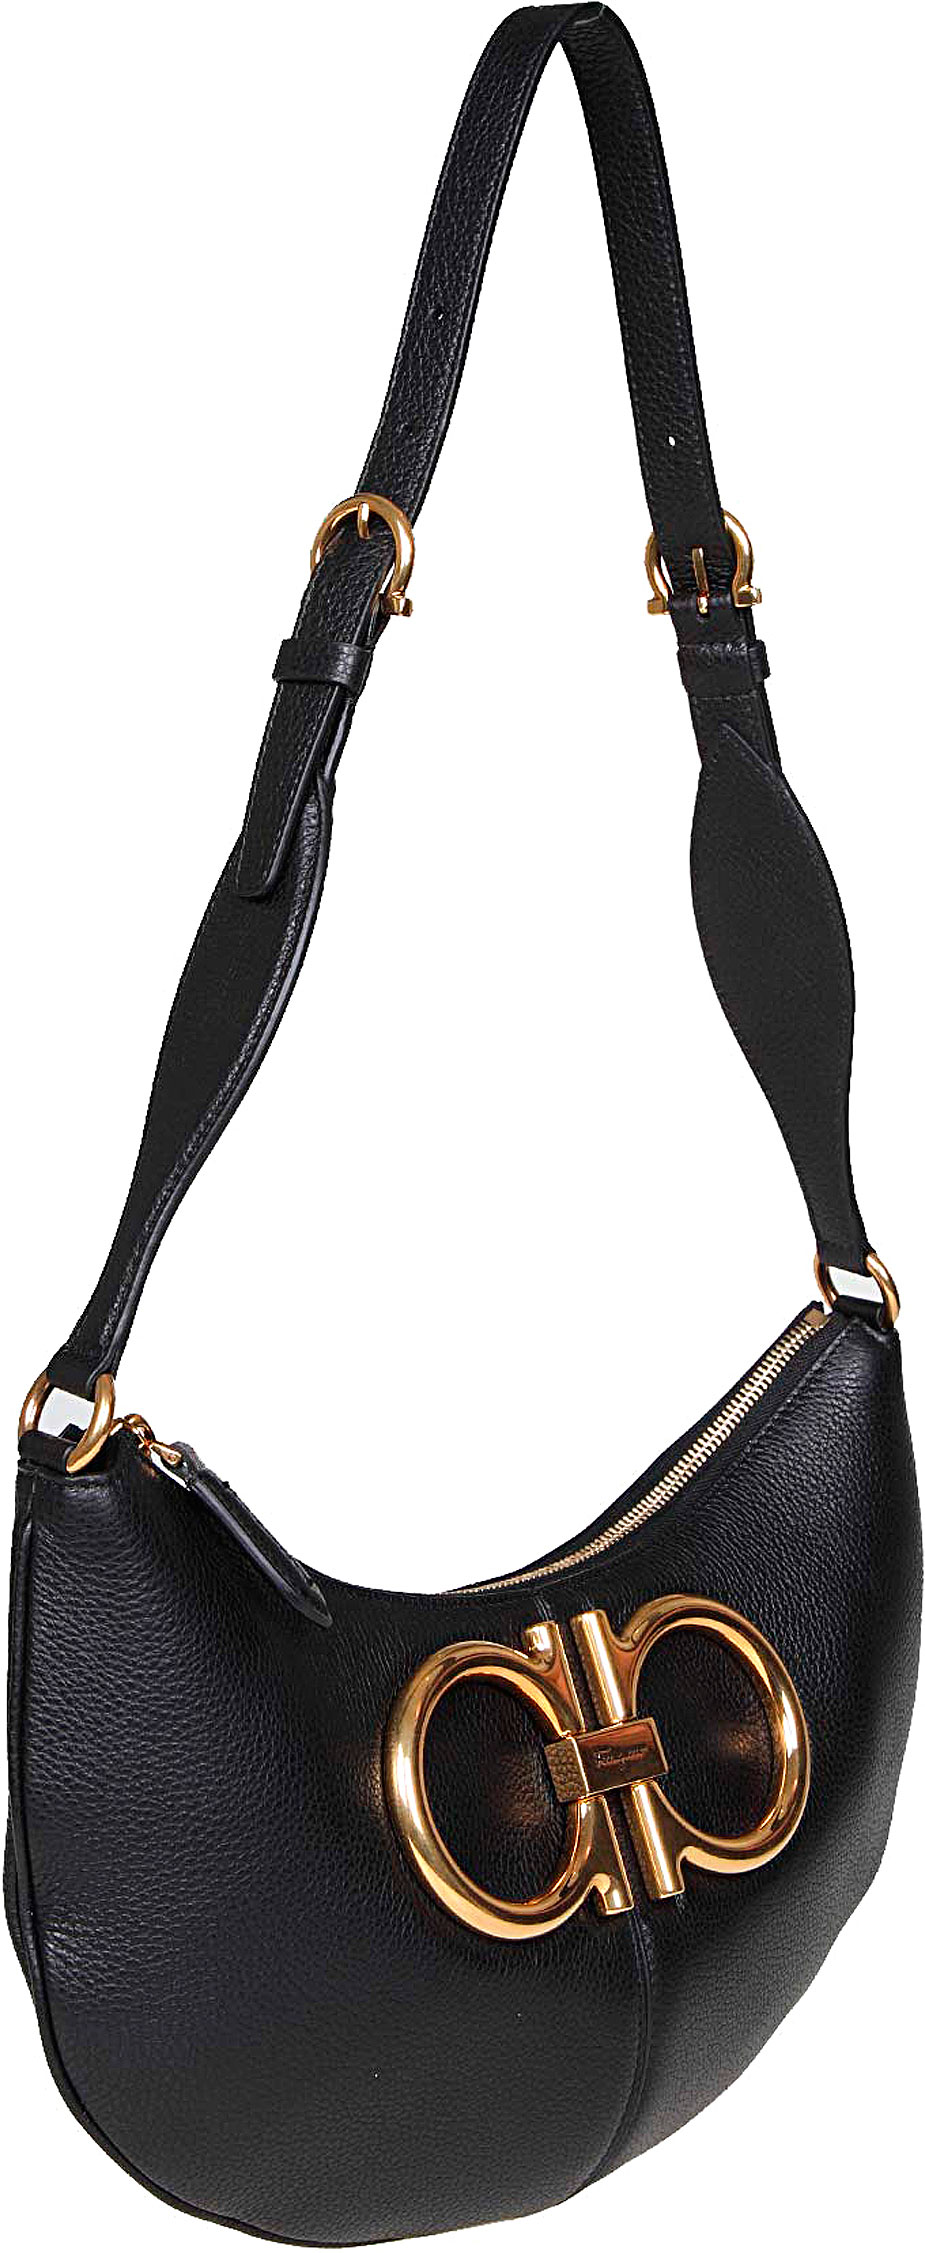 Handbags Salvatore Ferragamo, Style code: 759154-212885-nero